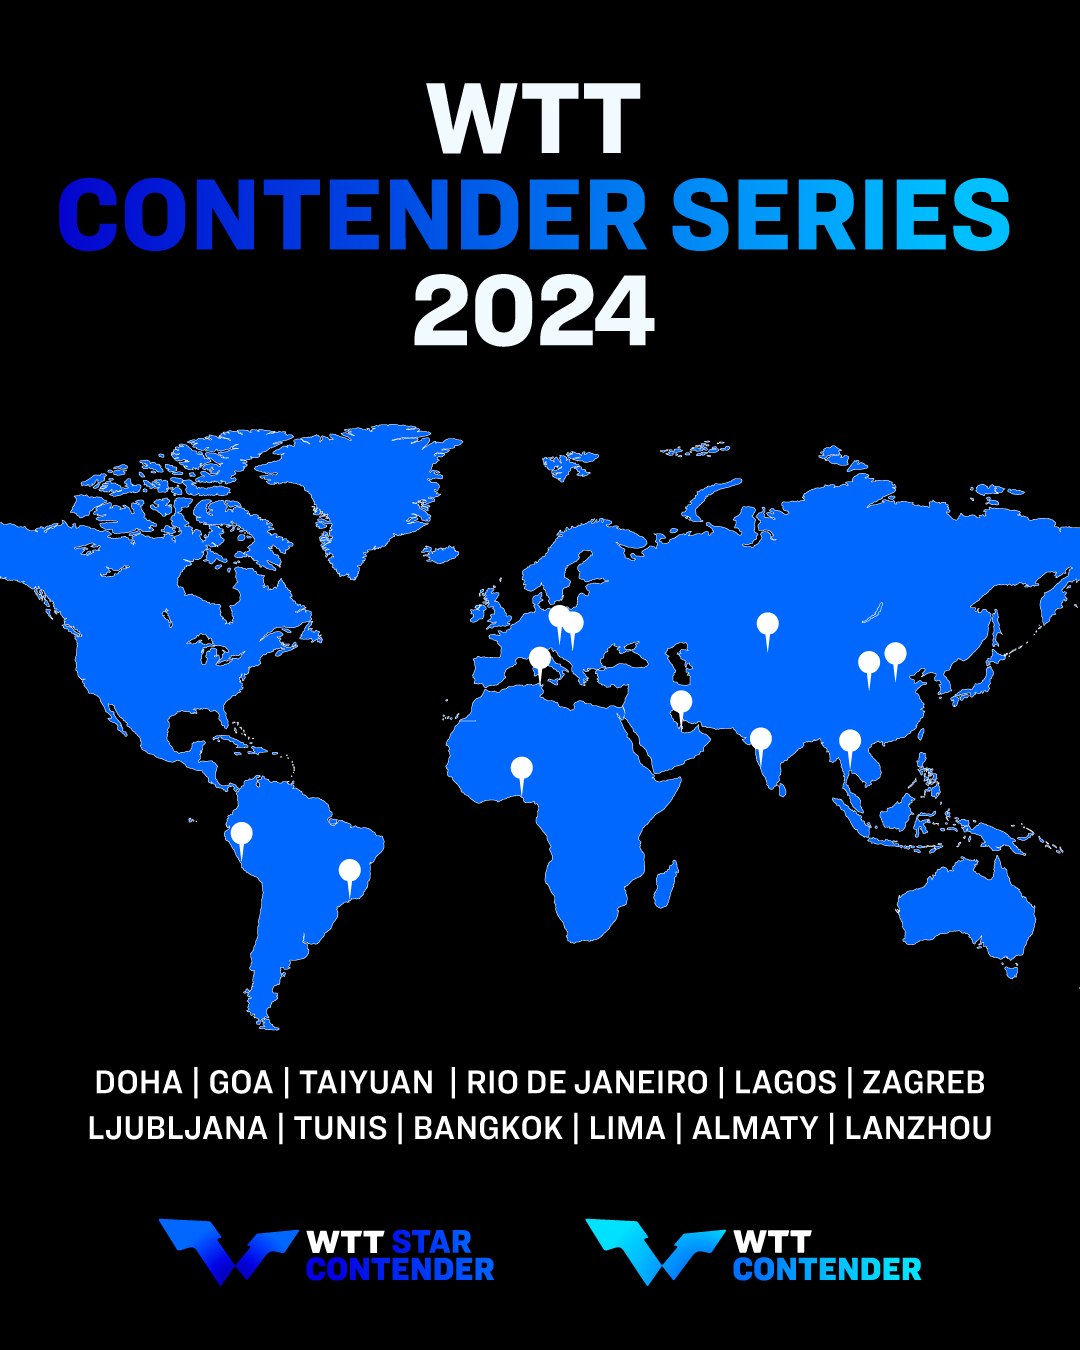 WTT Contender Series 2024 coming to Doha, Goa, Taiyuan, Rio TT Crunch